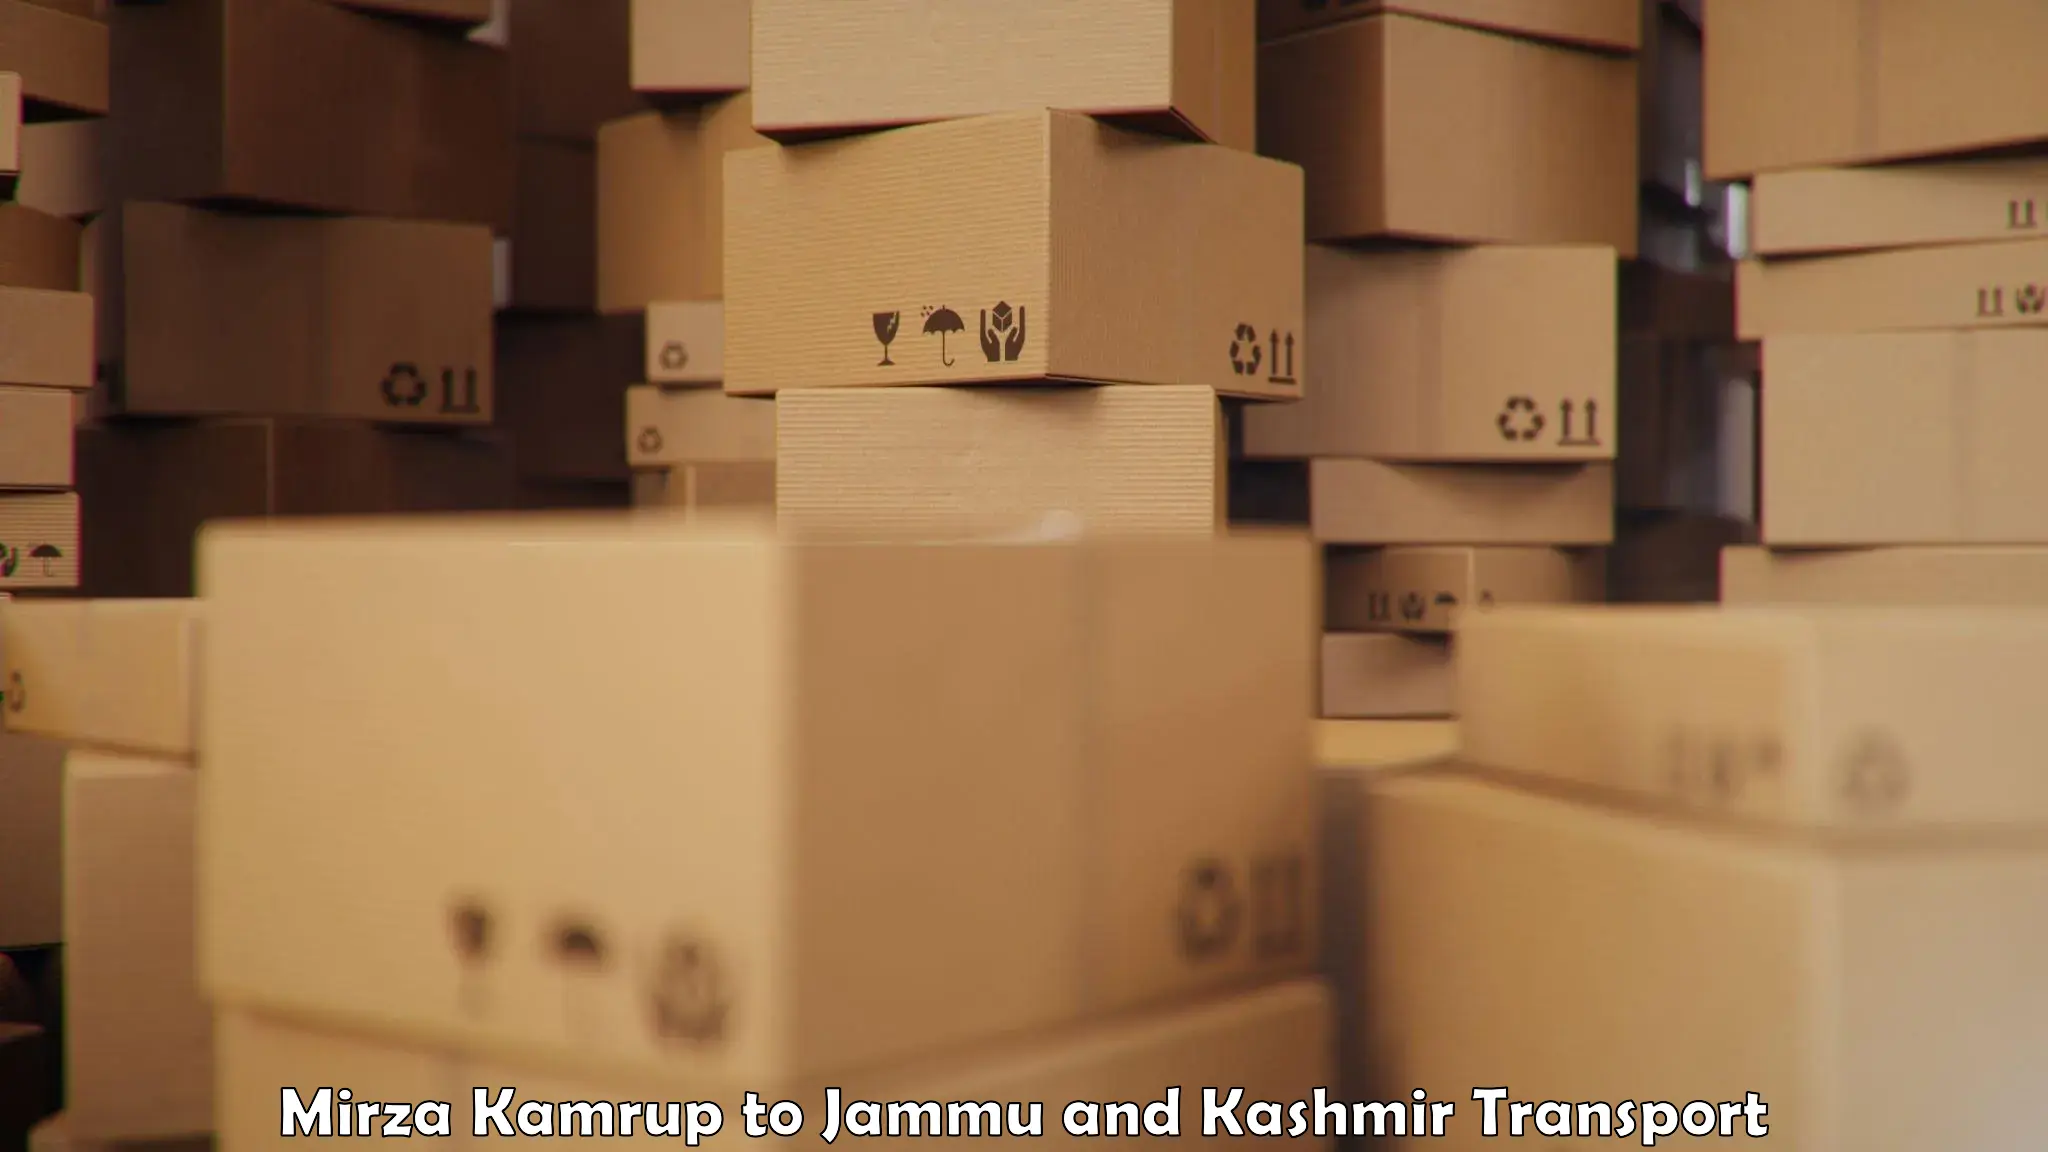 Furniture transport service Mirza Kamrup to Nagrota